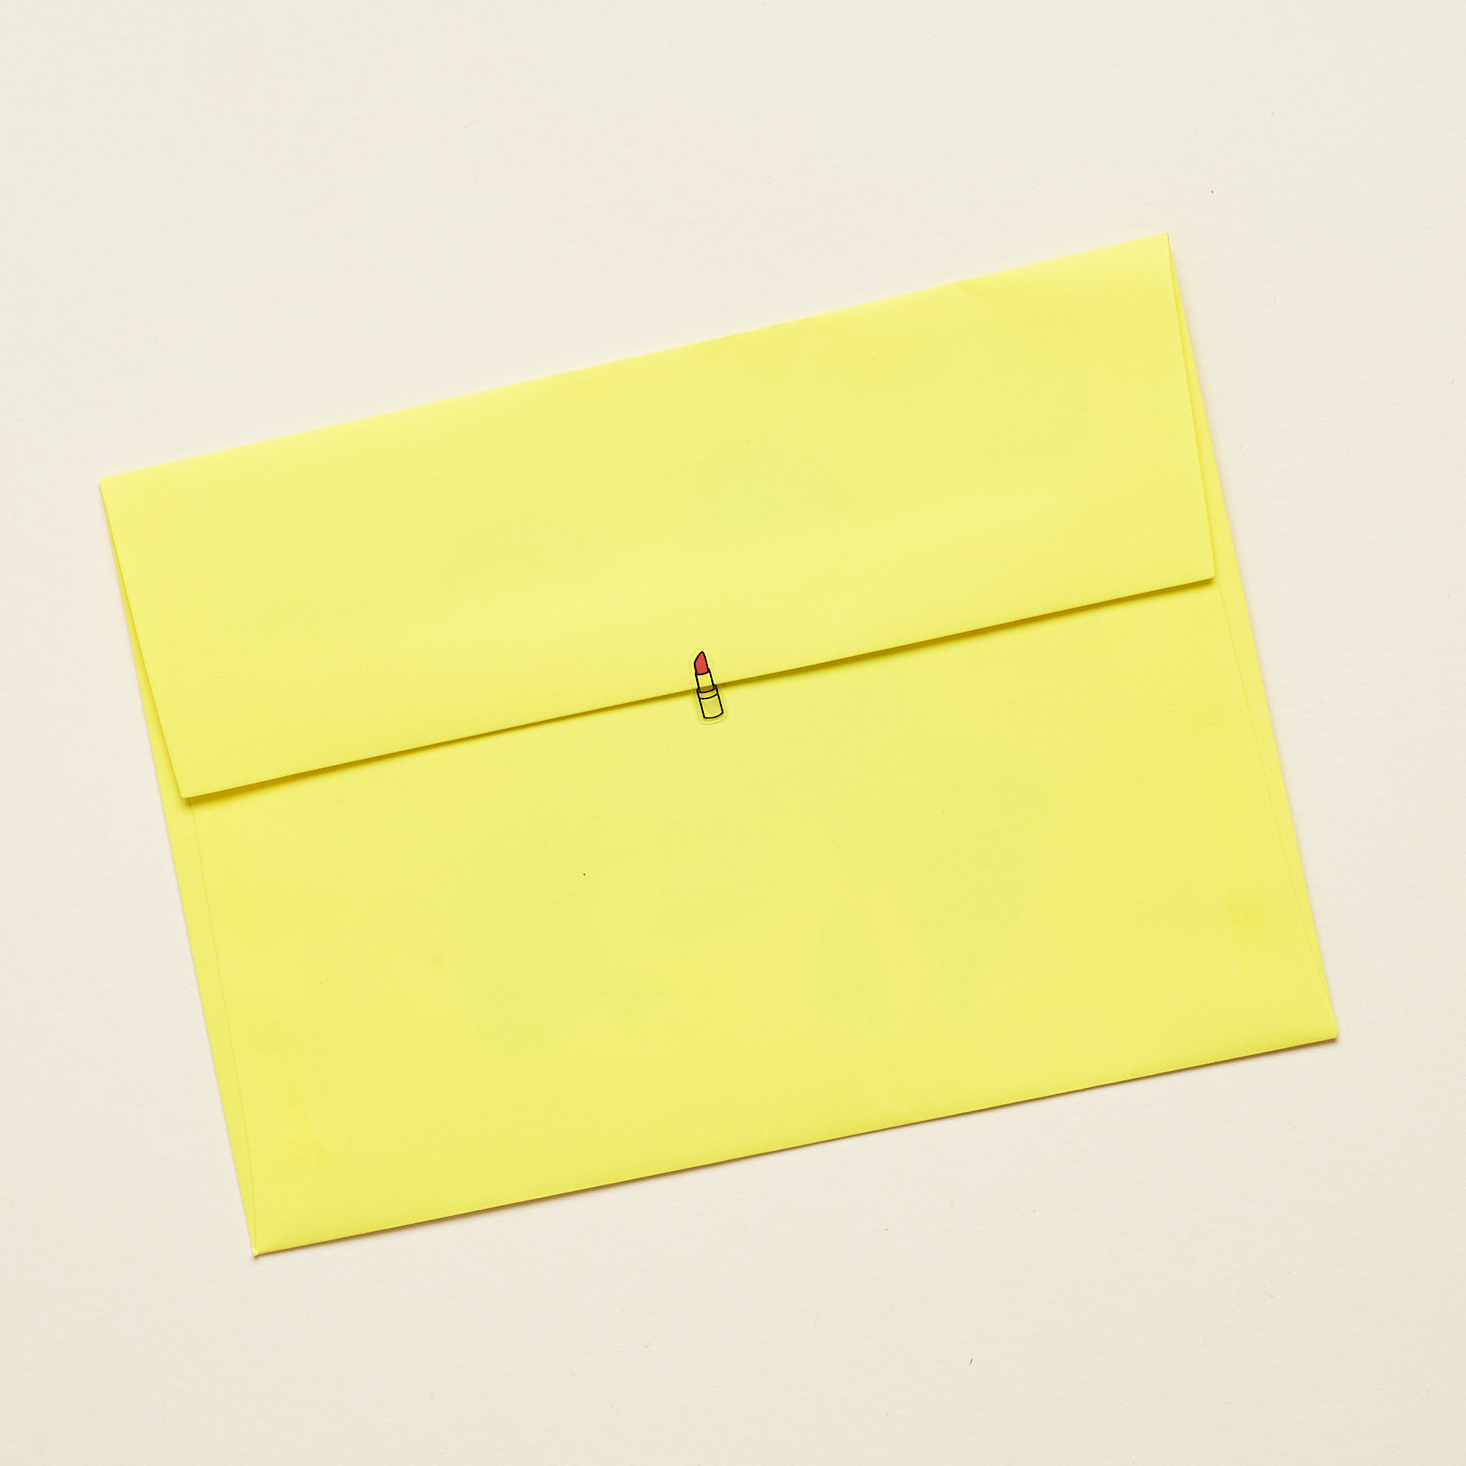 yellow envelope